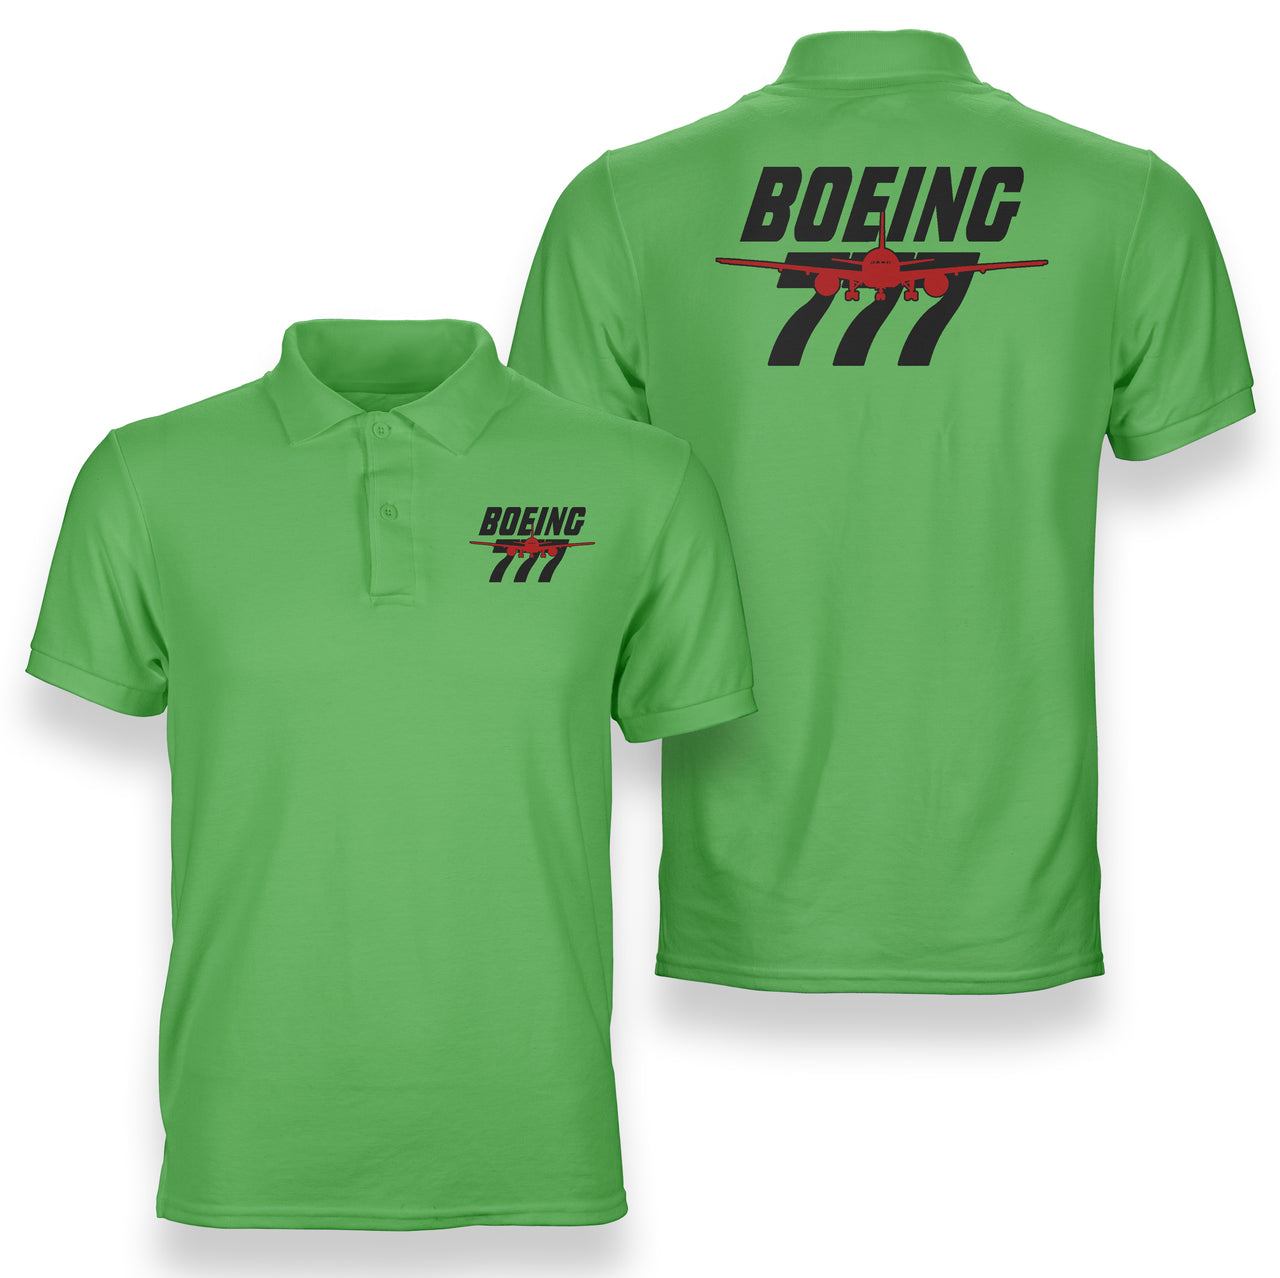 Amazing Boeing 777 Designed Double Side Polo T-Shirts